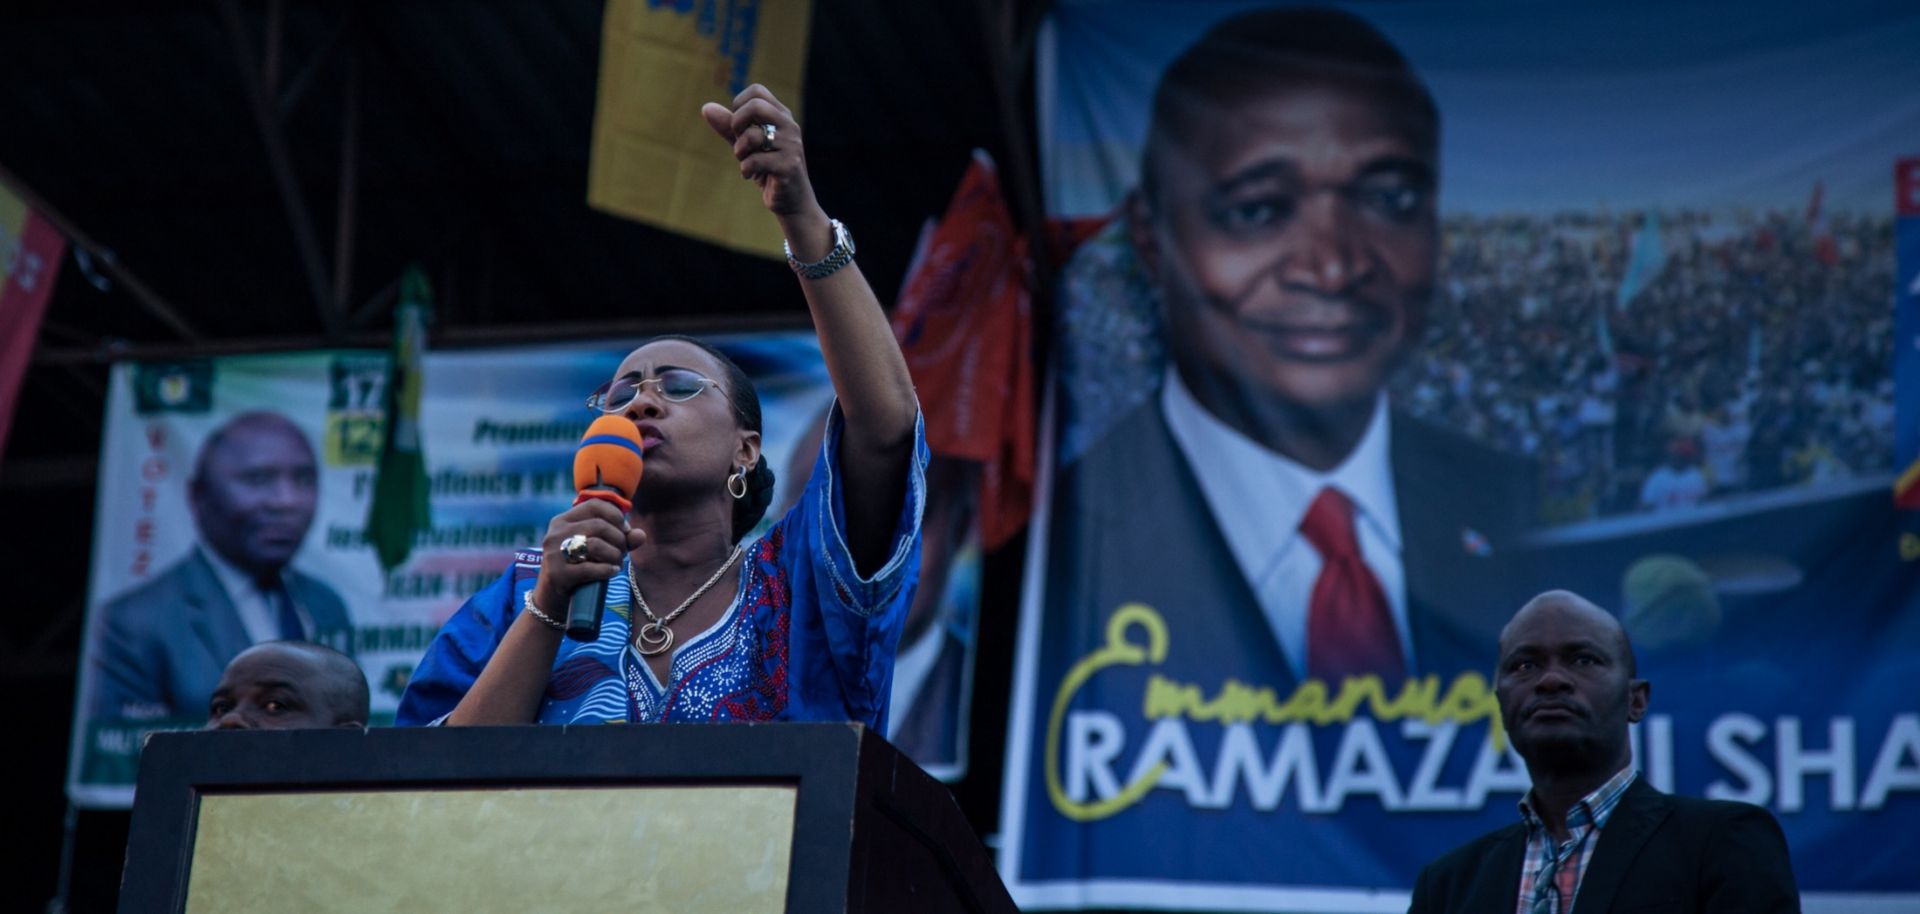 Olive Kabila, the wife of President Joseph Kabila, speaks during an election rally.